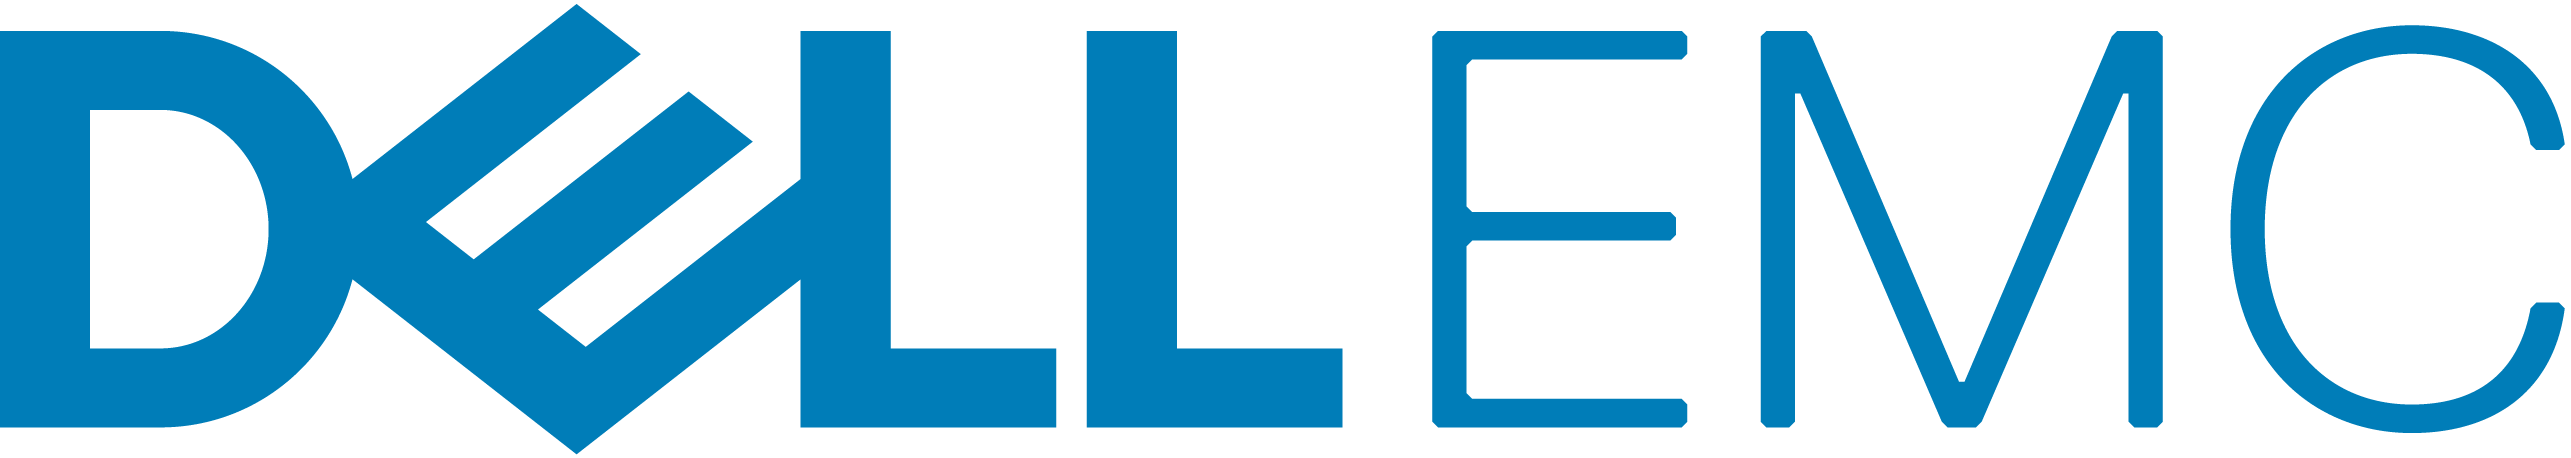 EMC Partner Logo - Dell EMC Partner & Reseller